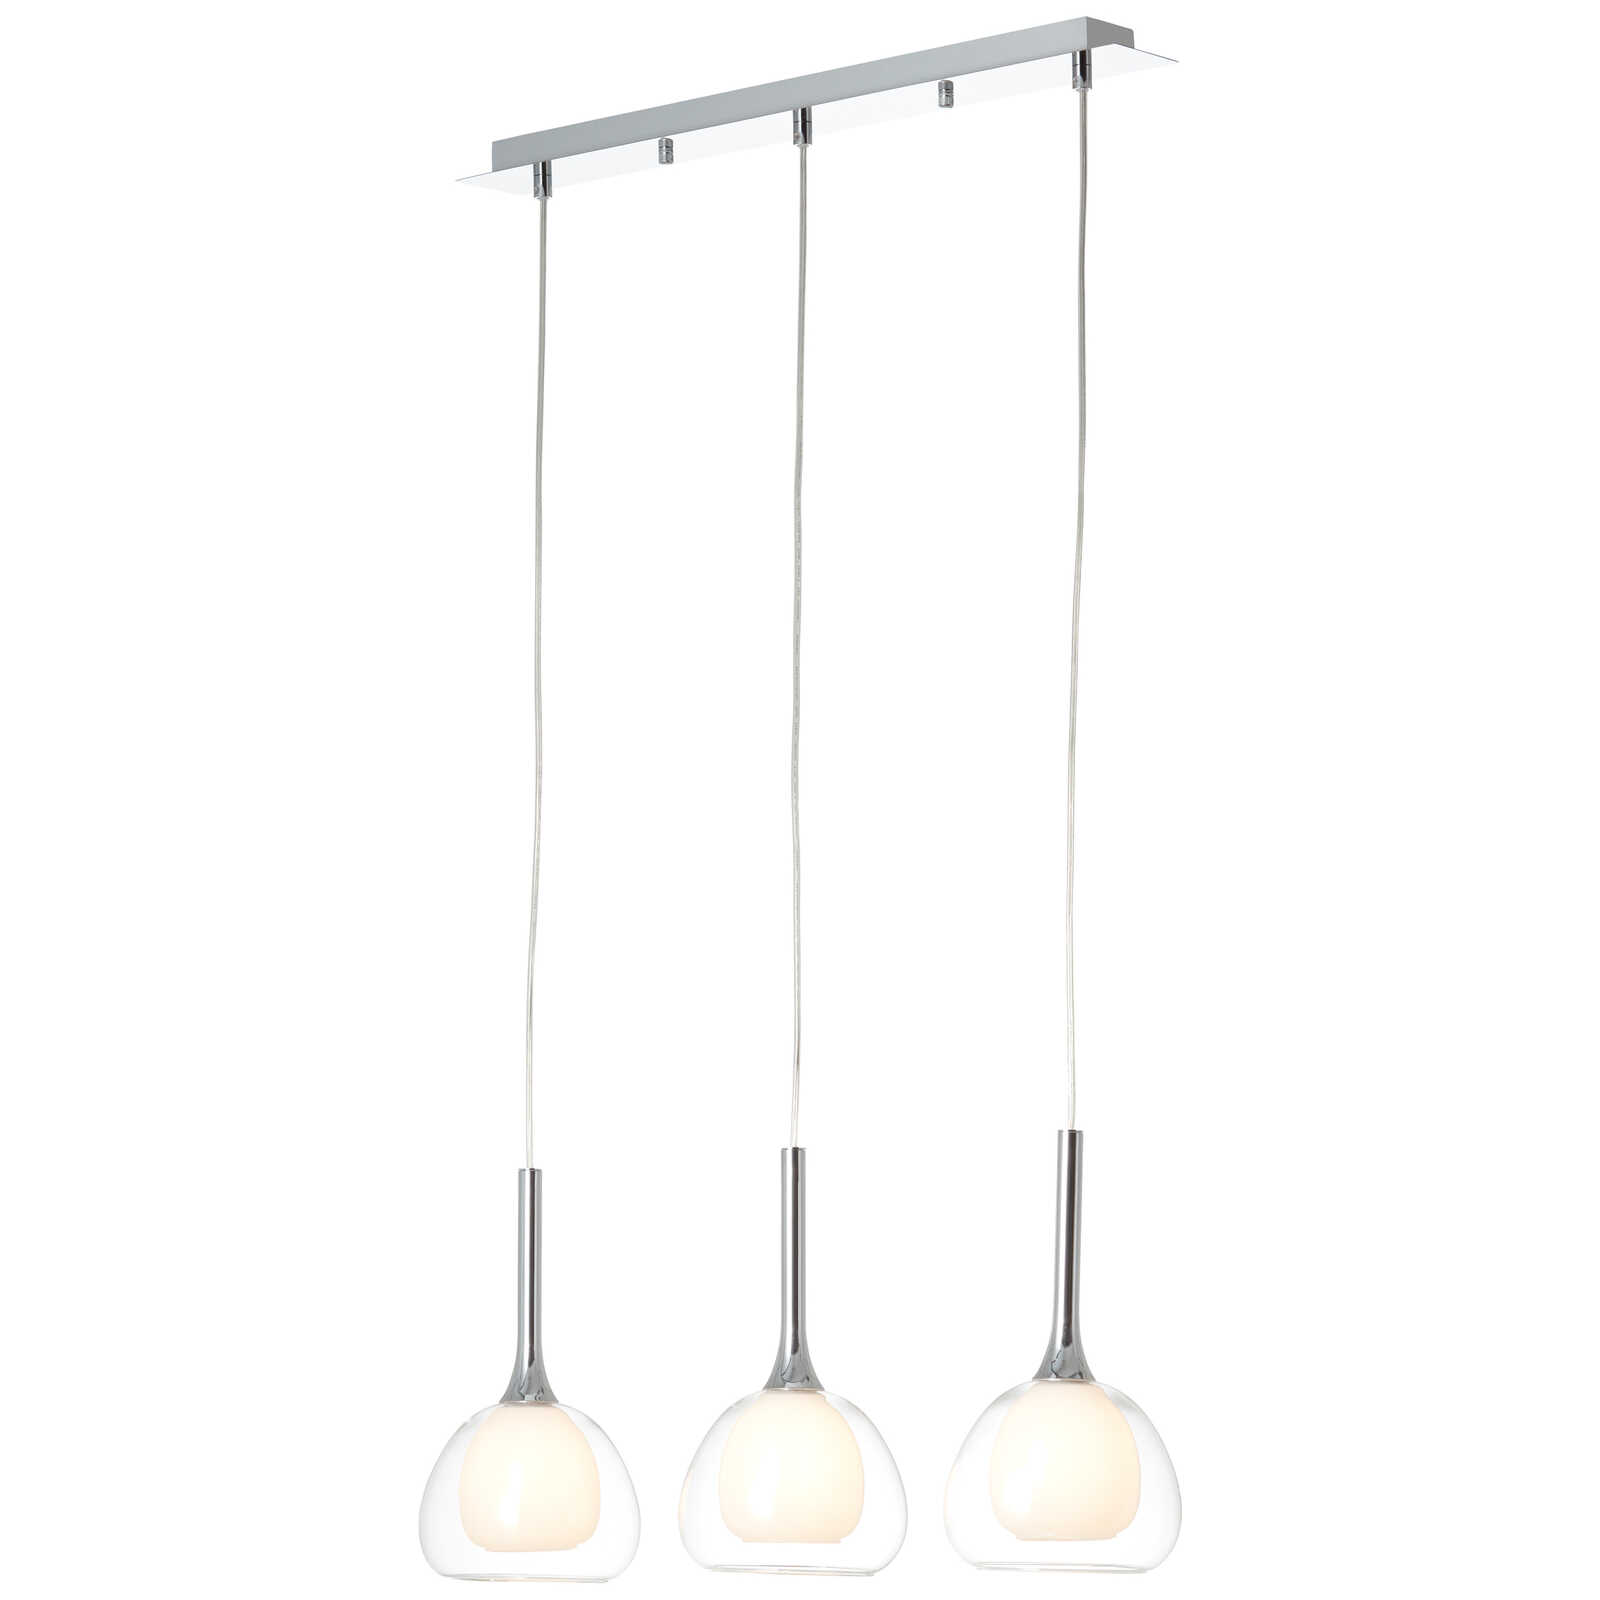             Glazen hanglamp - Iris 2 - Metallic
        